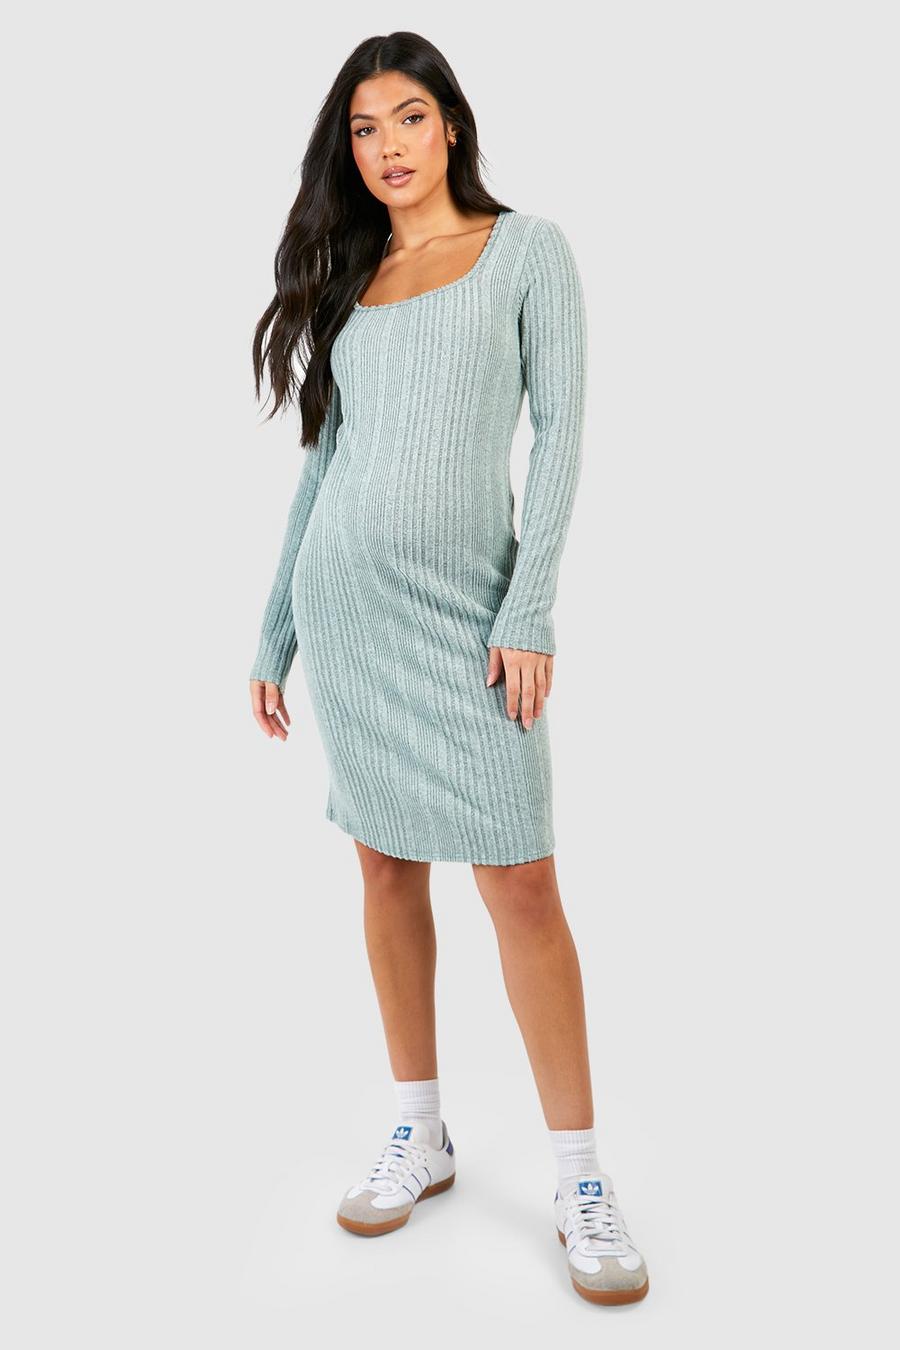 Sage Maternity Soft Rib Knitted Square Neck Dress